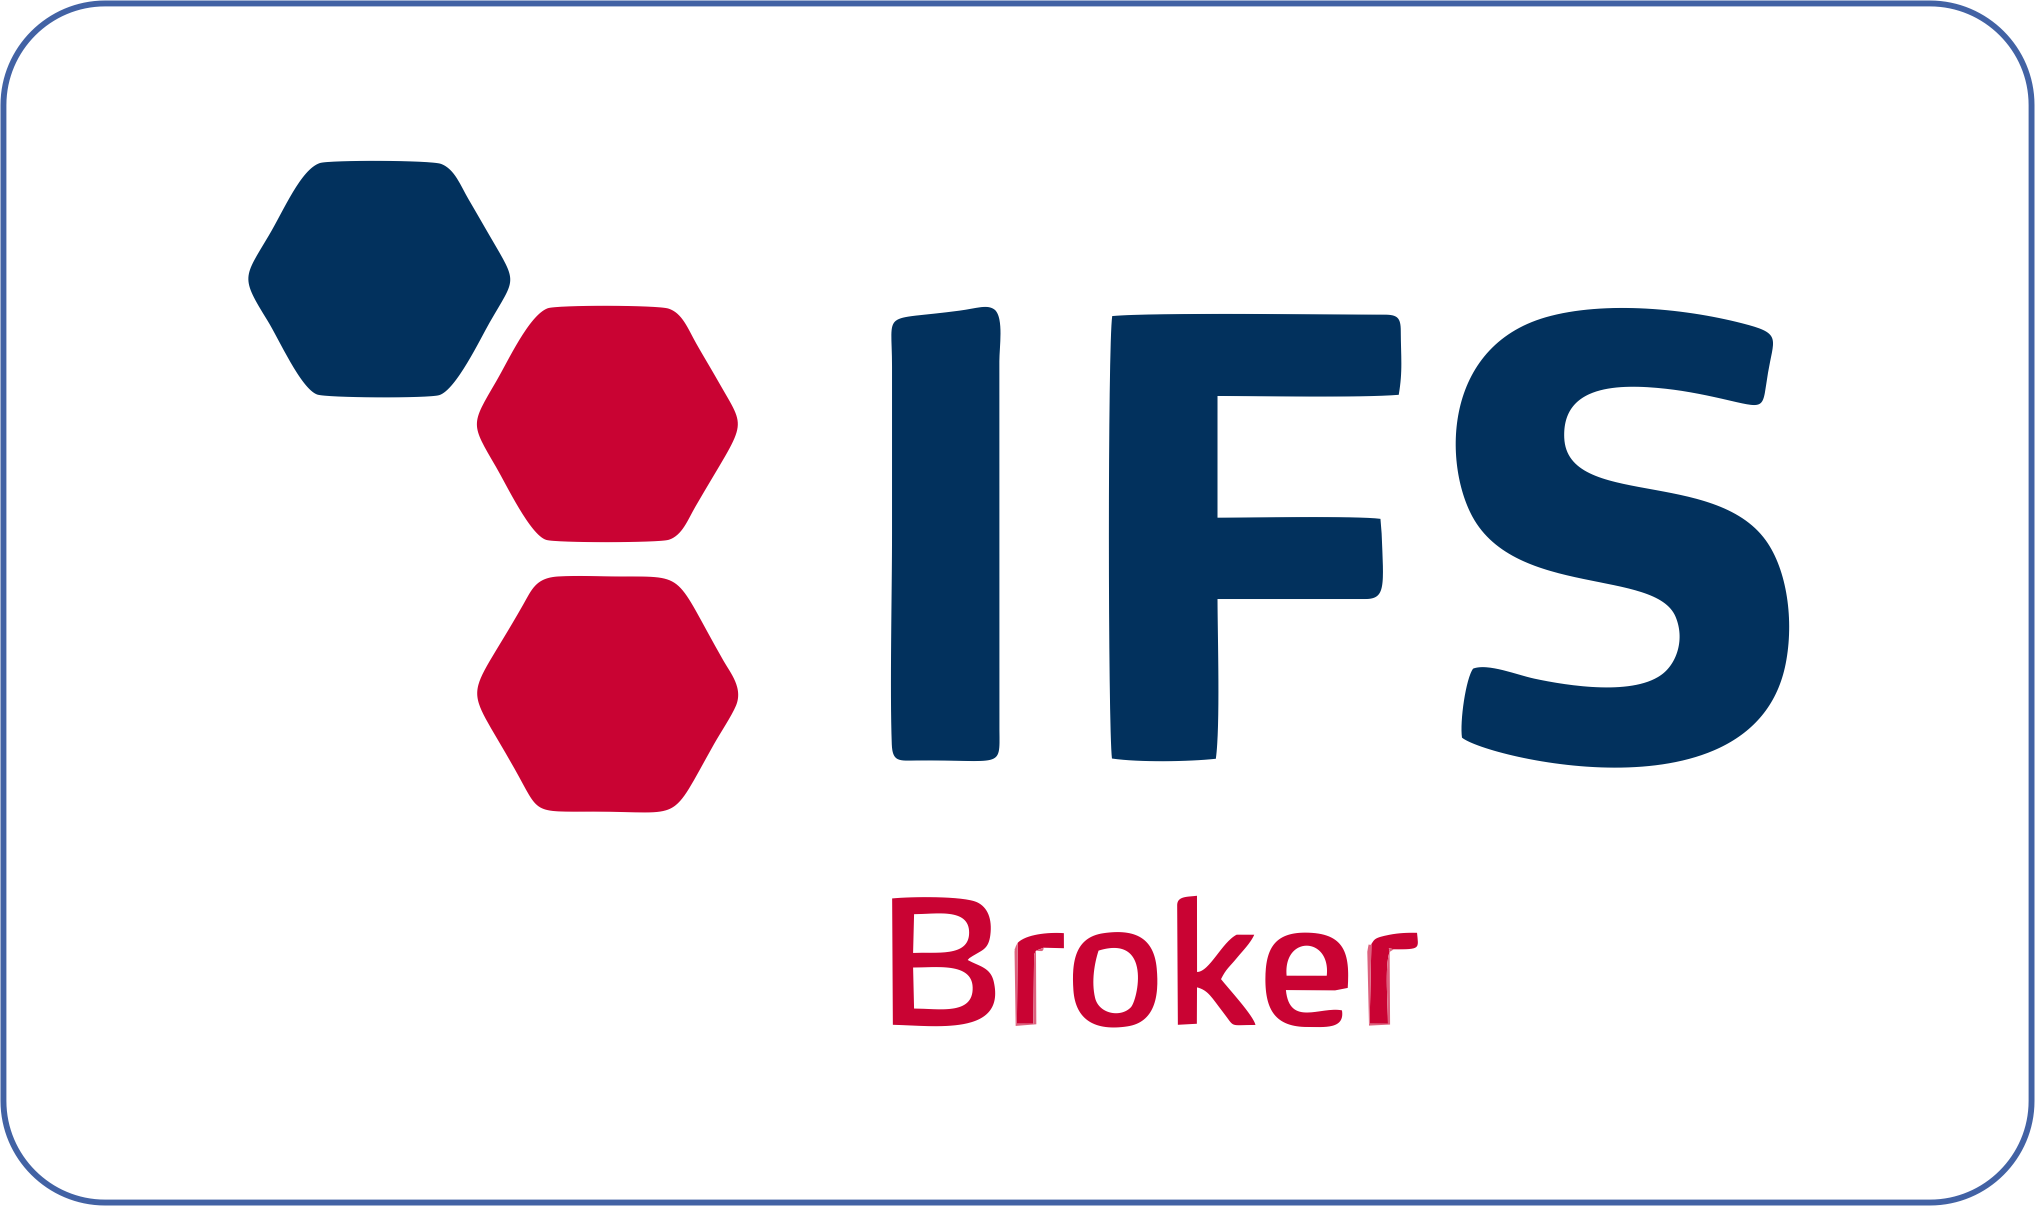 logo IFS